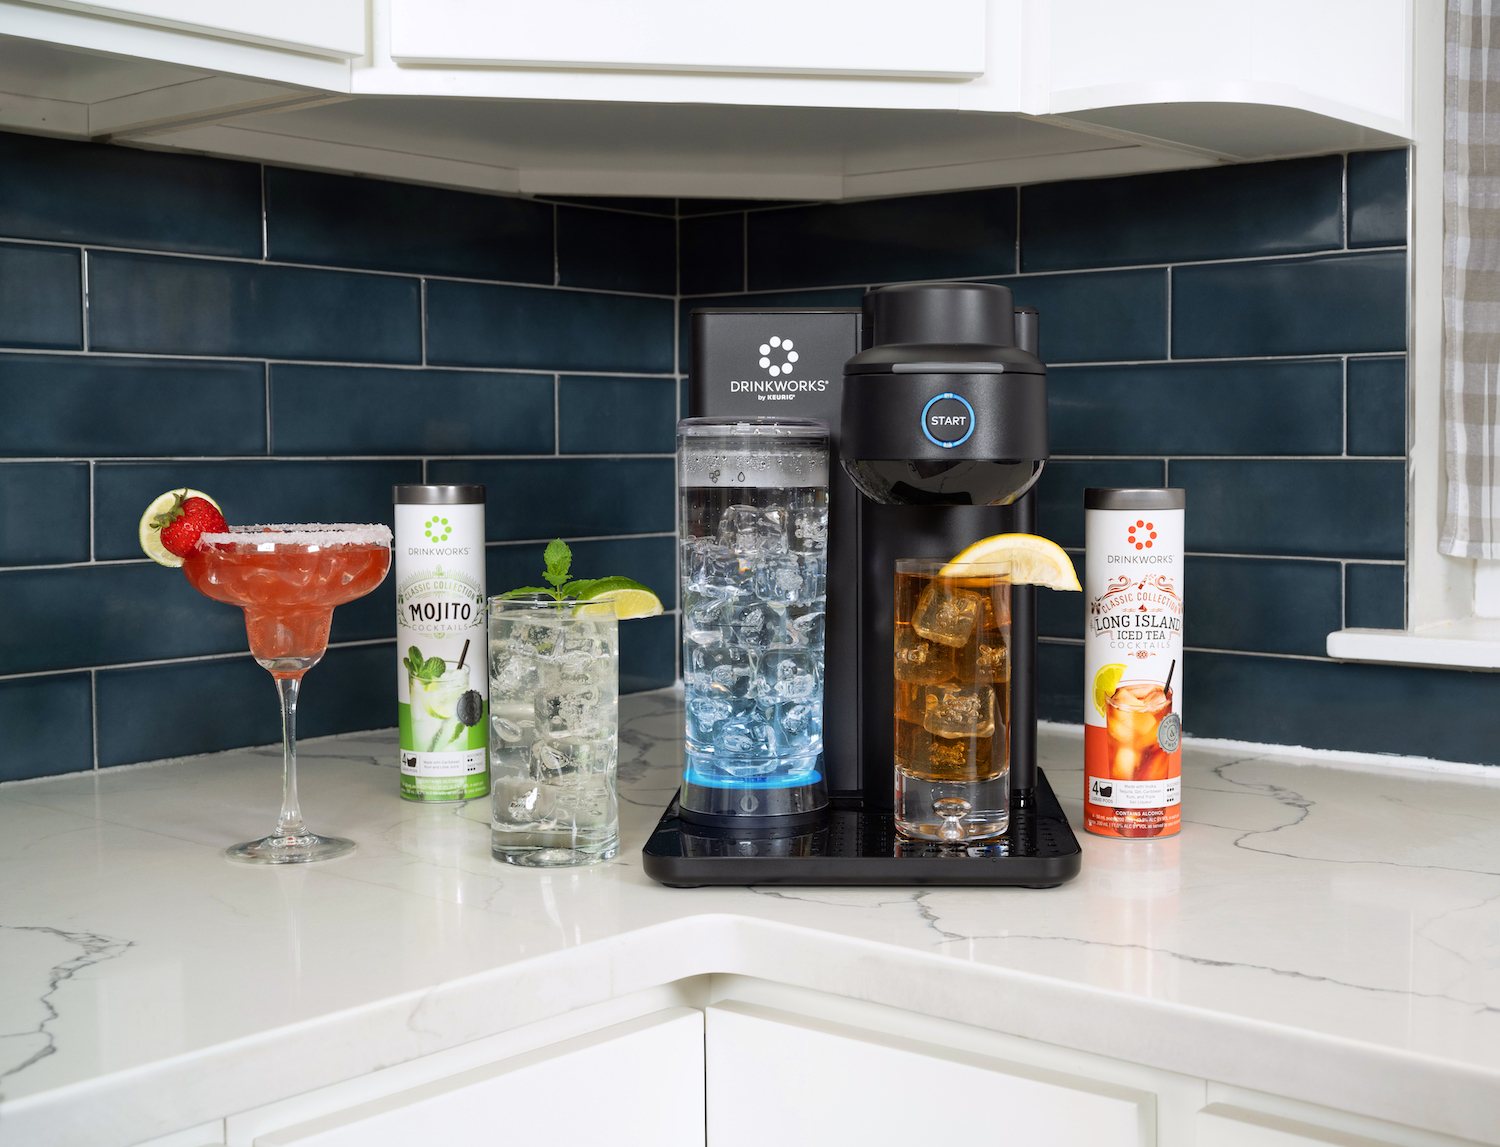 Cocktails In Your Keurig? New Drinkworks Home Bar Makes It